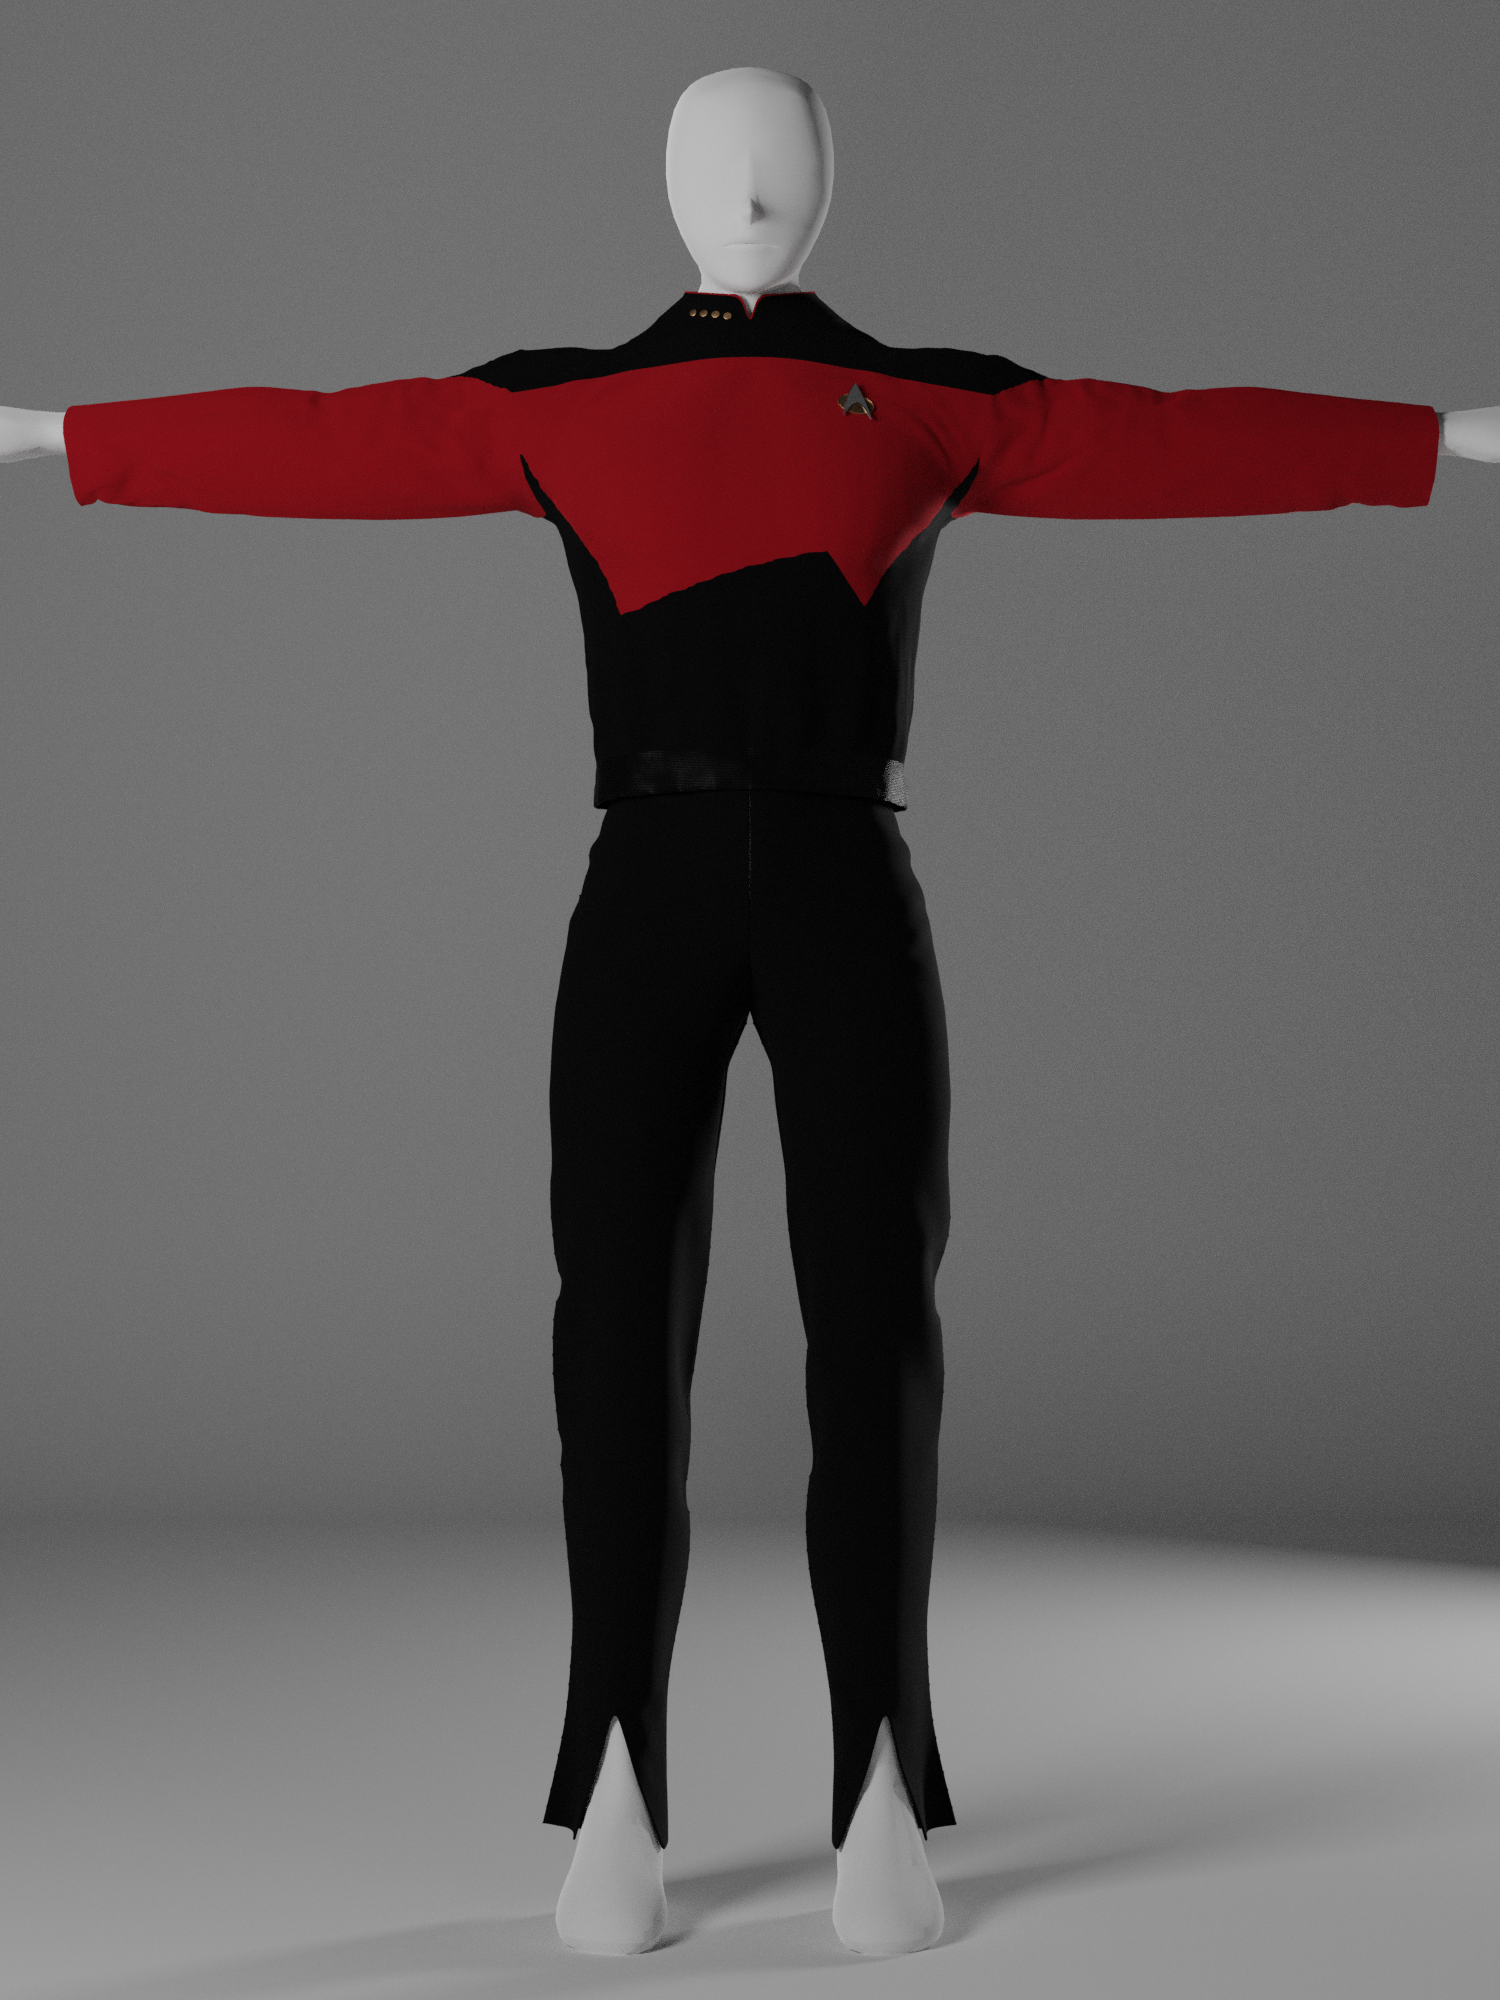 Star Trek TNG Uniform (S3+) preview image 1